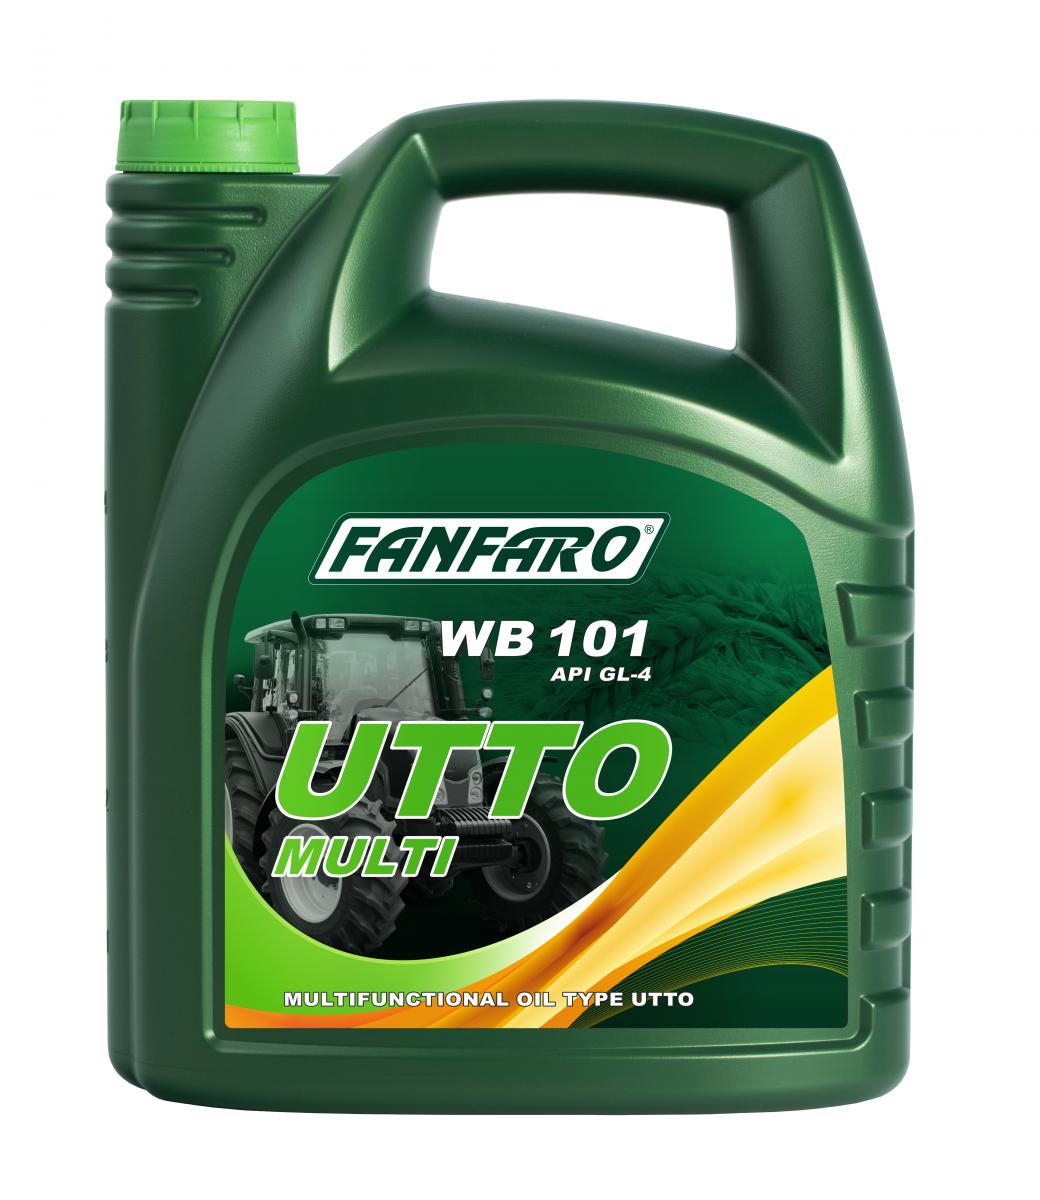 Fanfaro - 2701 Multi UTTO WB 101